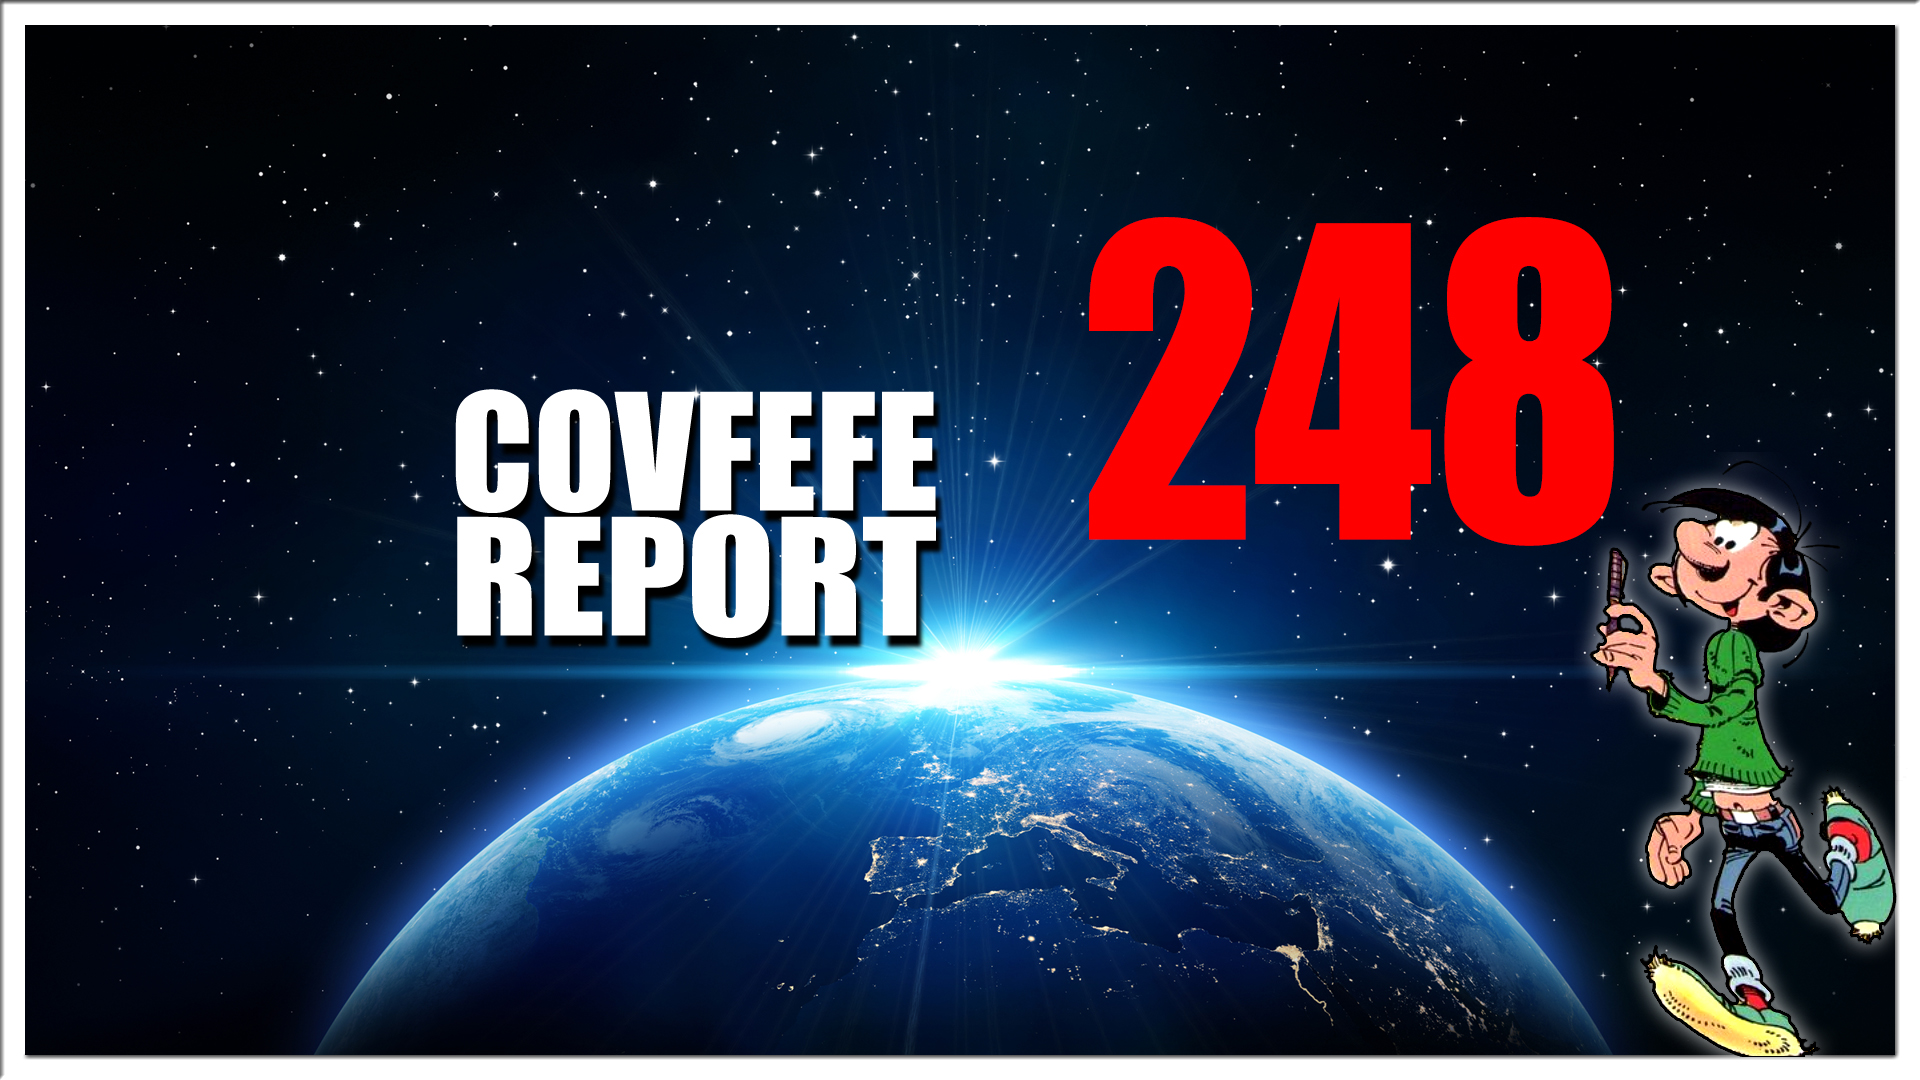 Covfefe Report 248. ngt